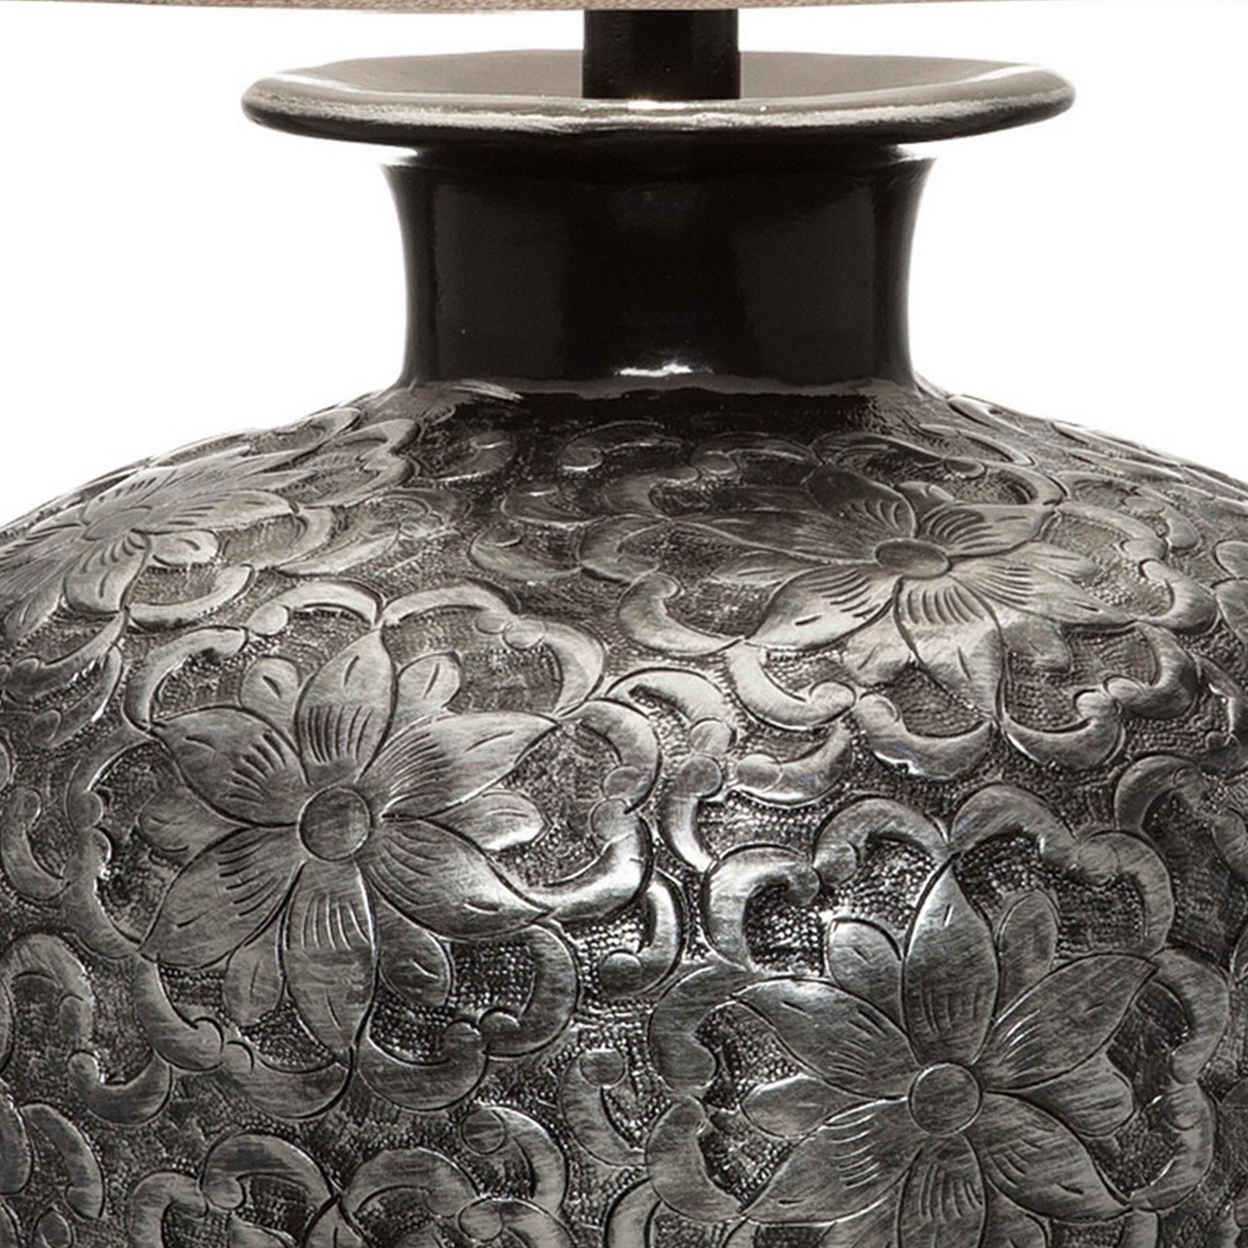 Neji 26 Inch Table Lamp, Curved Pot Design Base, Floral Pattern, Silver- Saltoro Sherpi